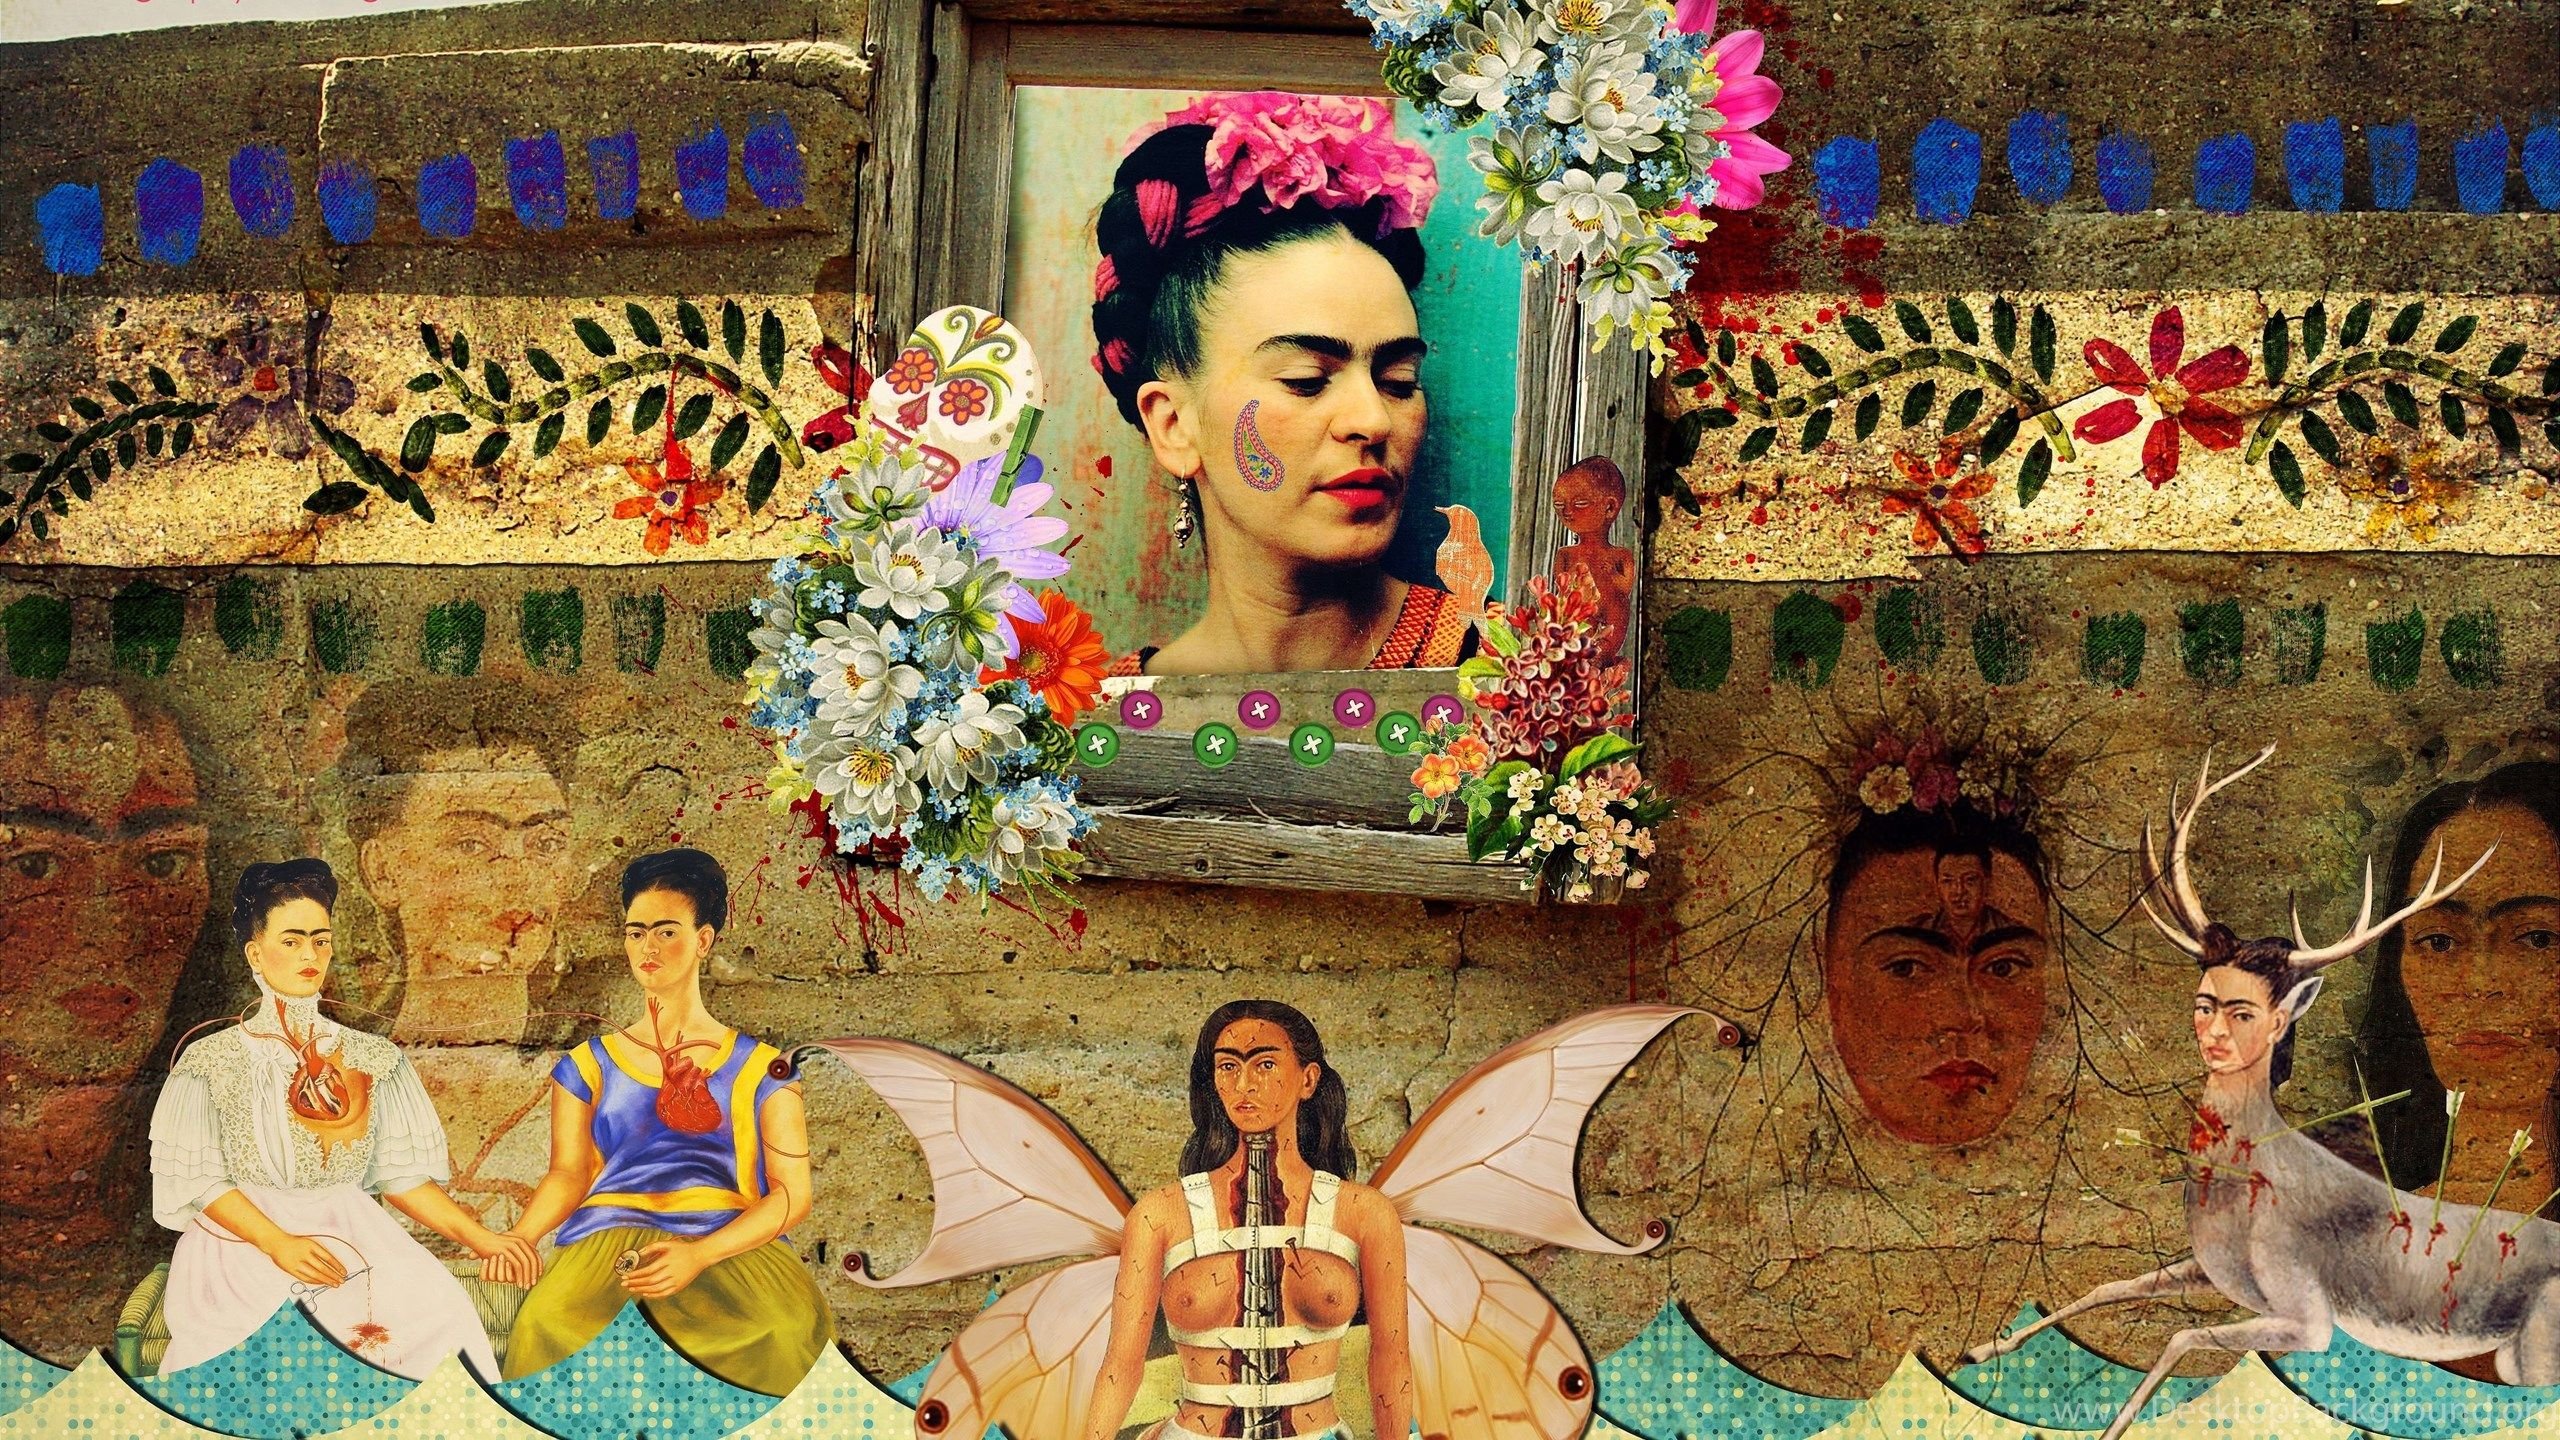 Frida Kahlo For Walls Wallpapers